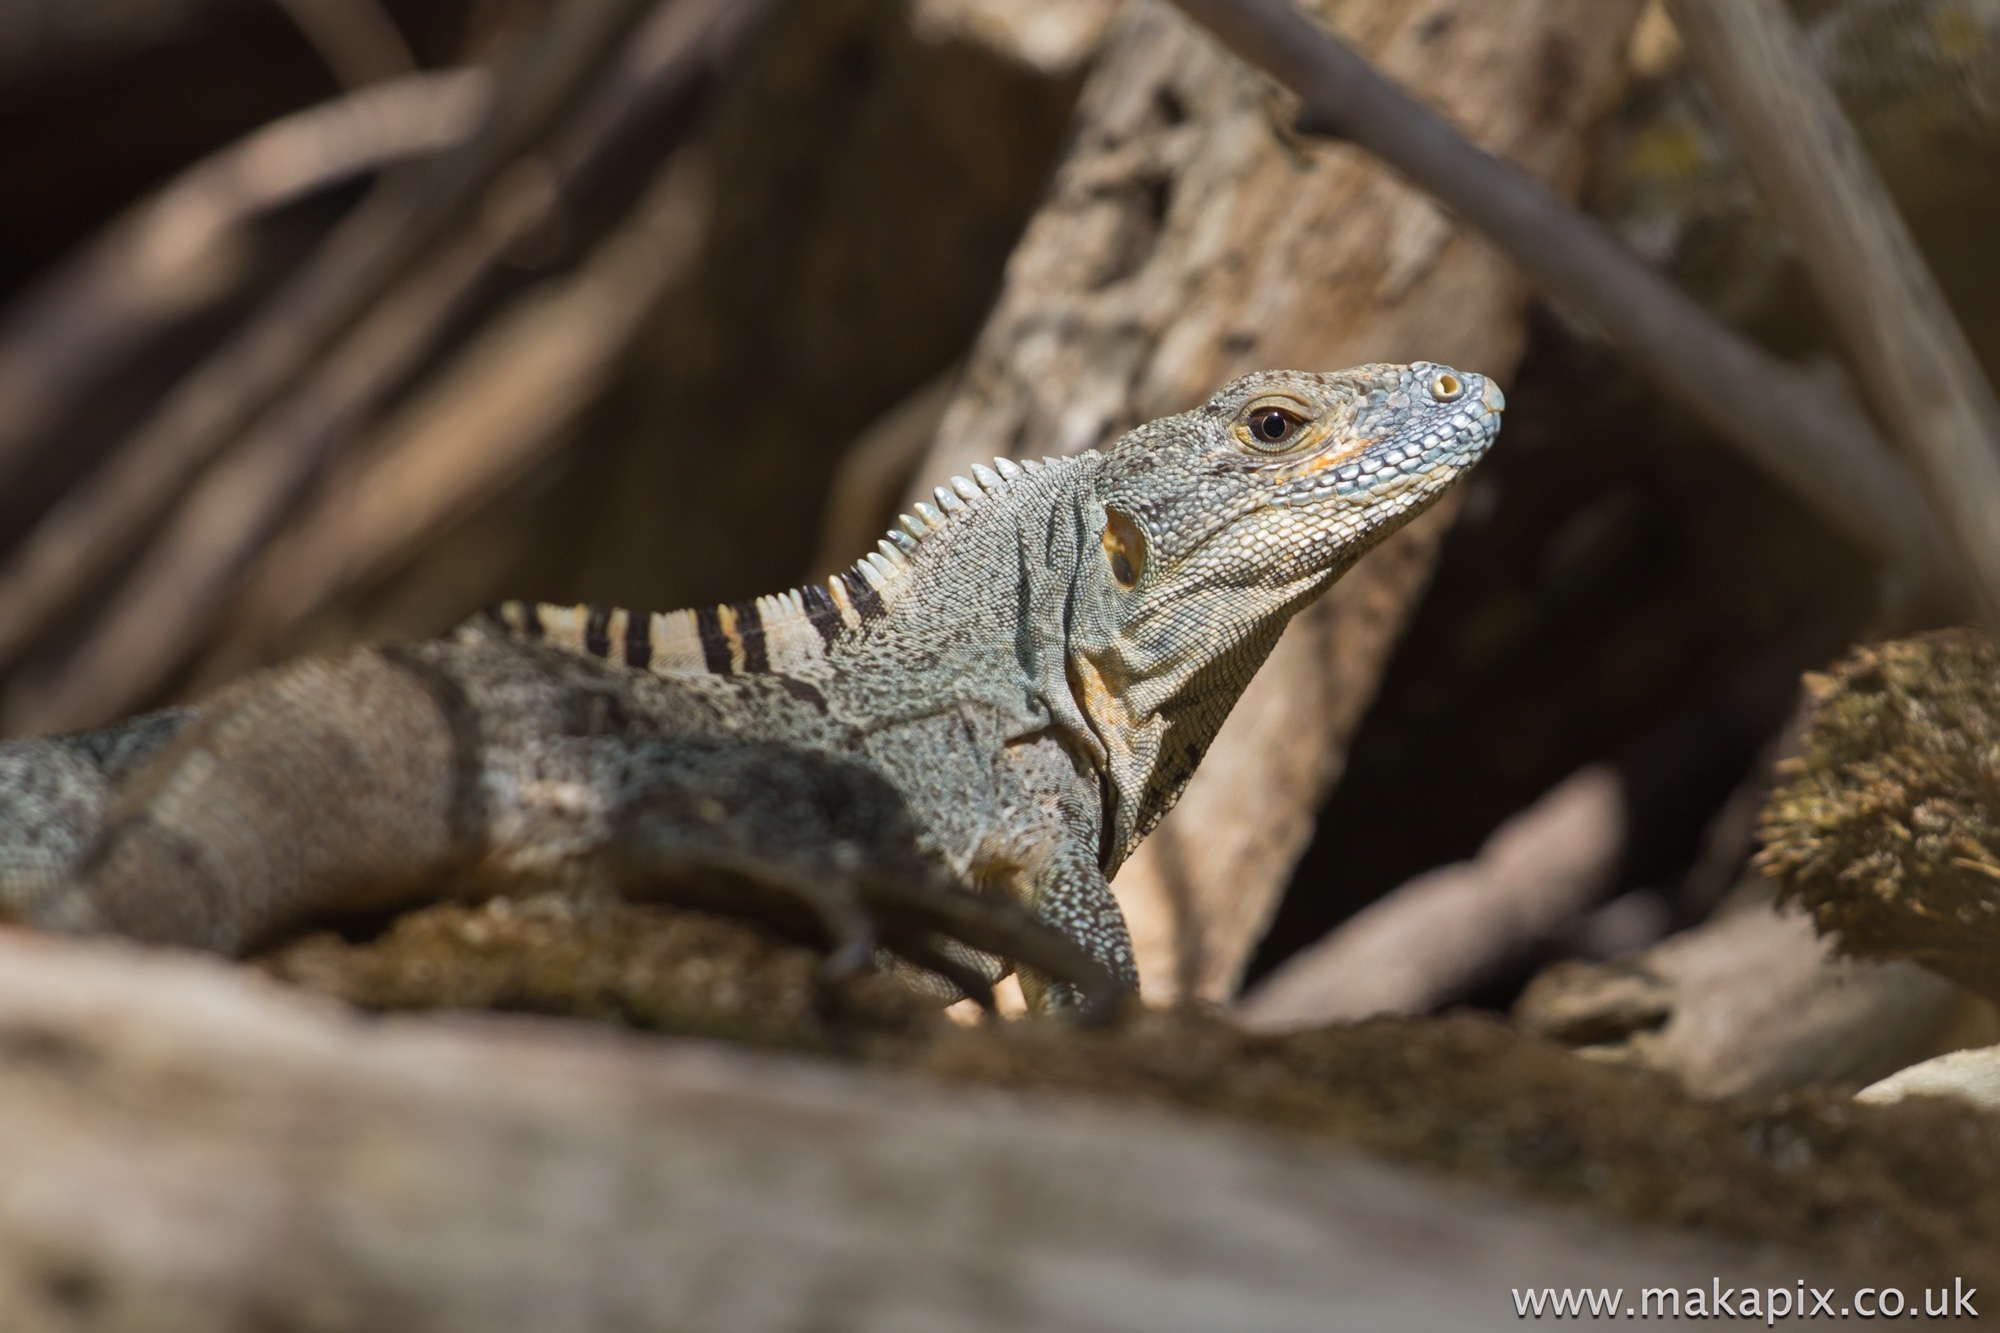 Ctenosaura Lizard, Costa Rica